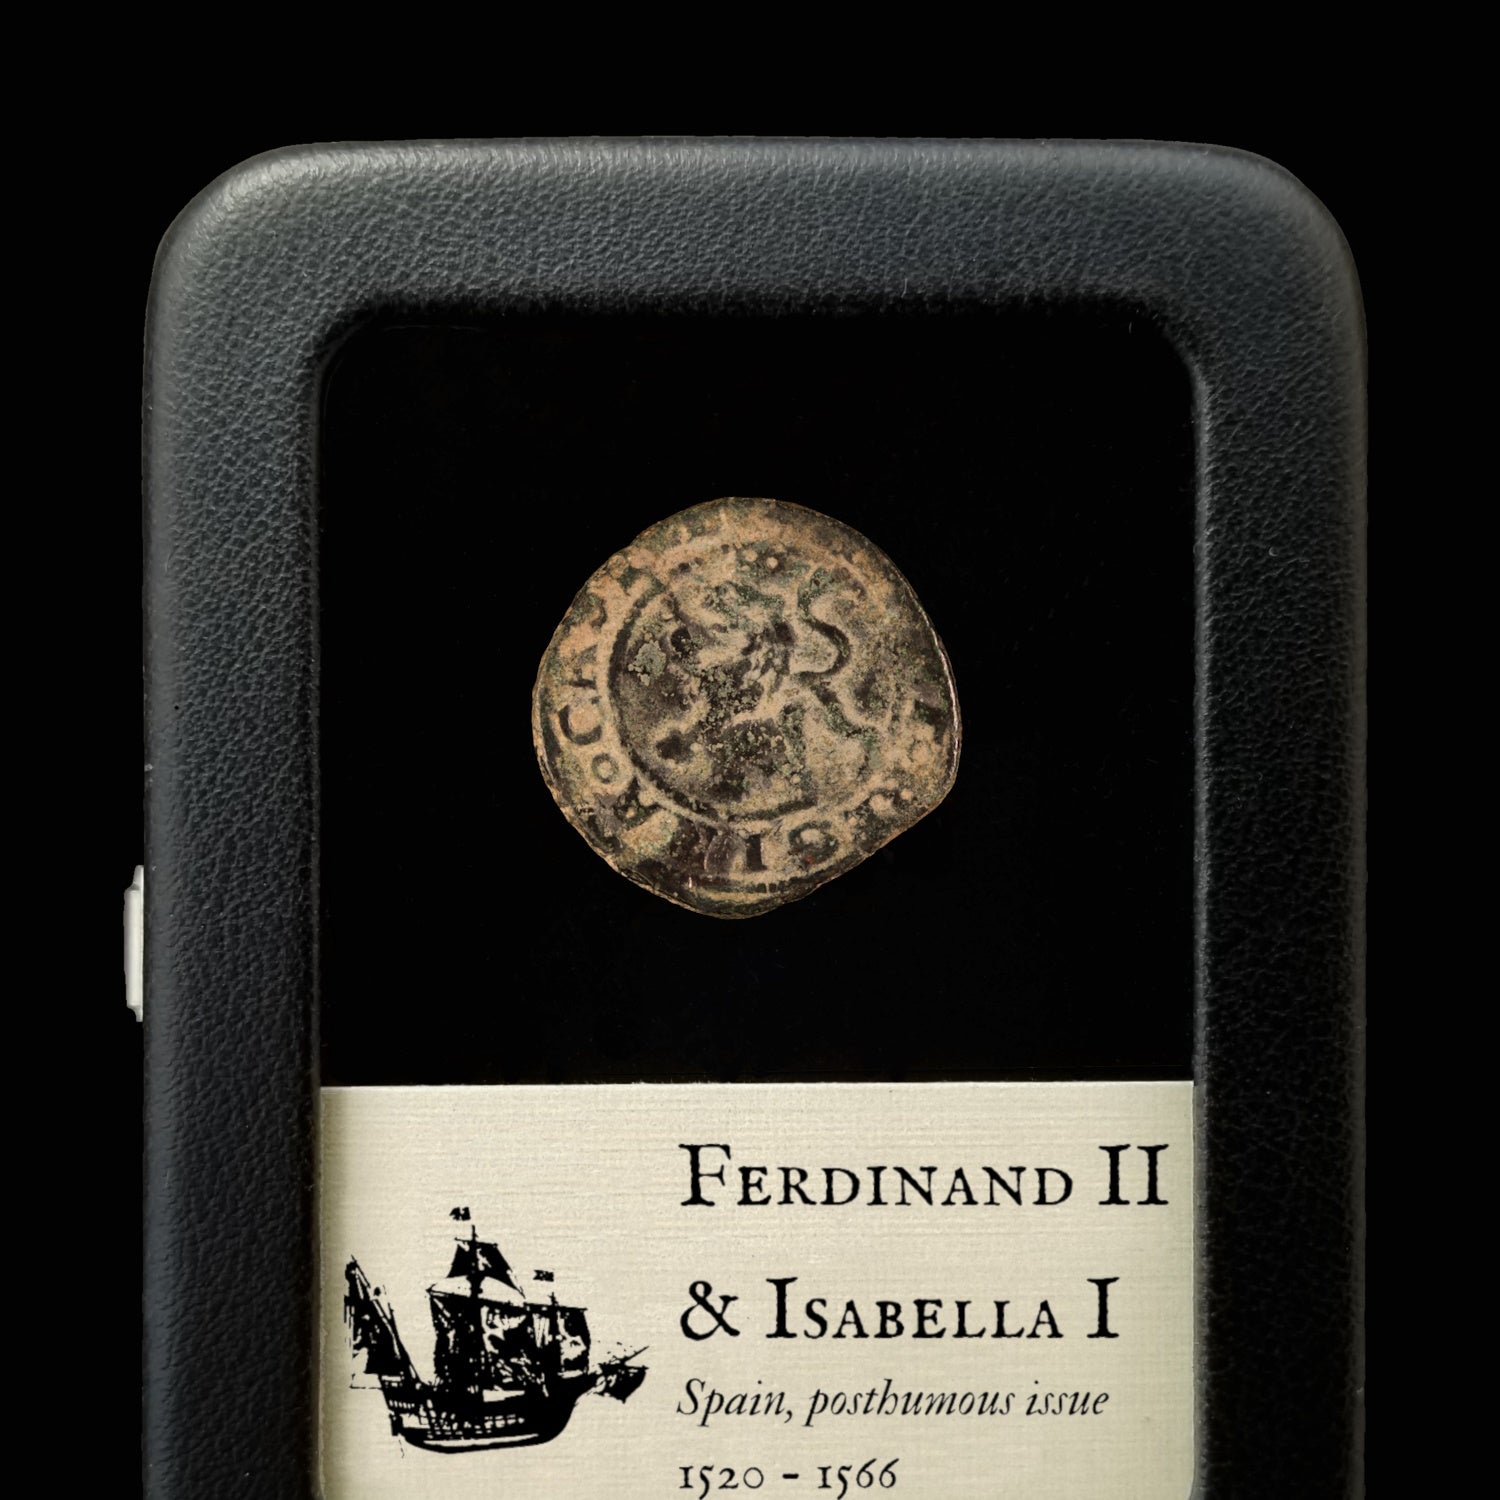 Ferdinand II & Isabella I (Catholic Monarchs) Maravedis - c. 1522 to 1566 CE - Spain